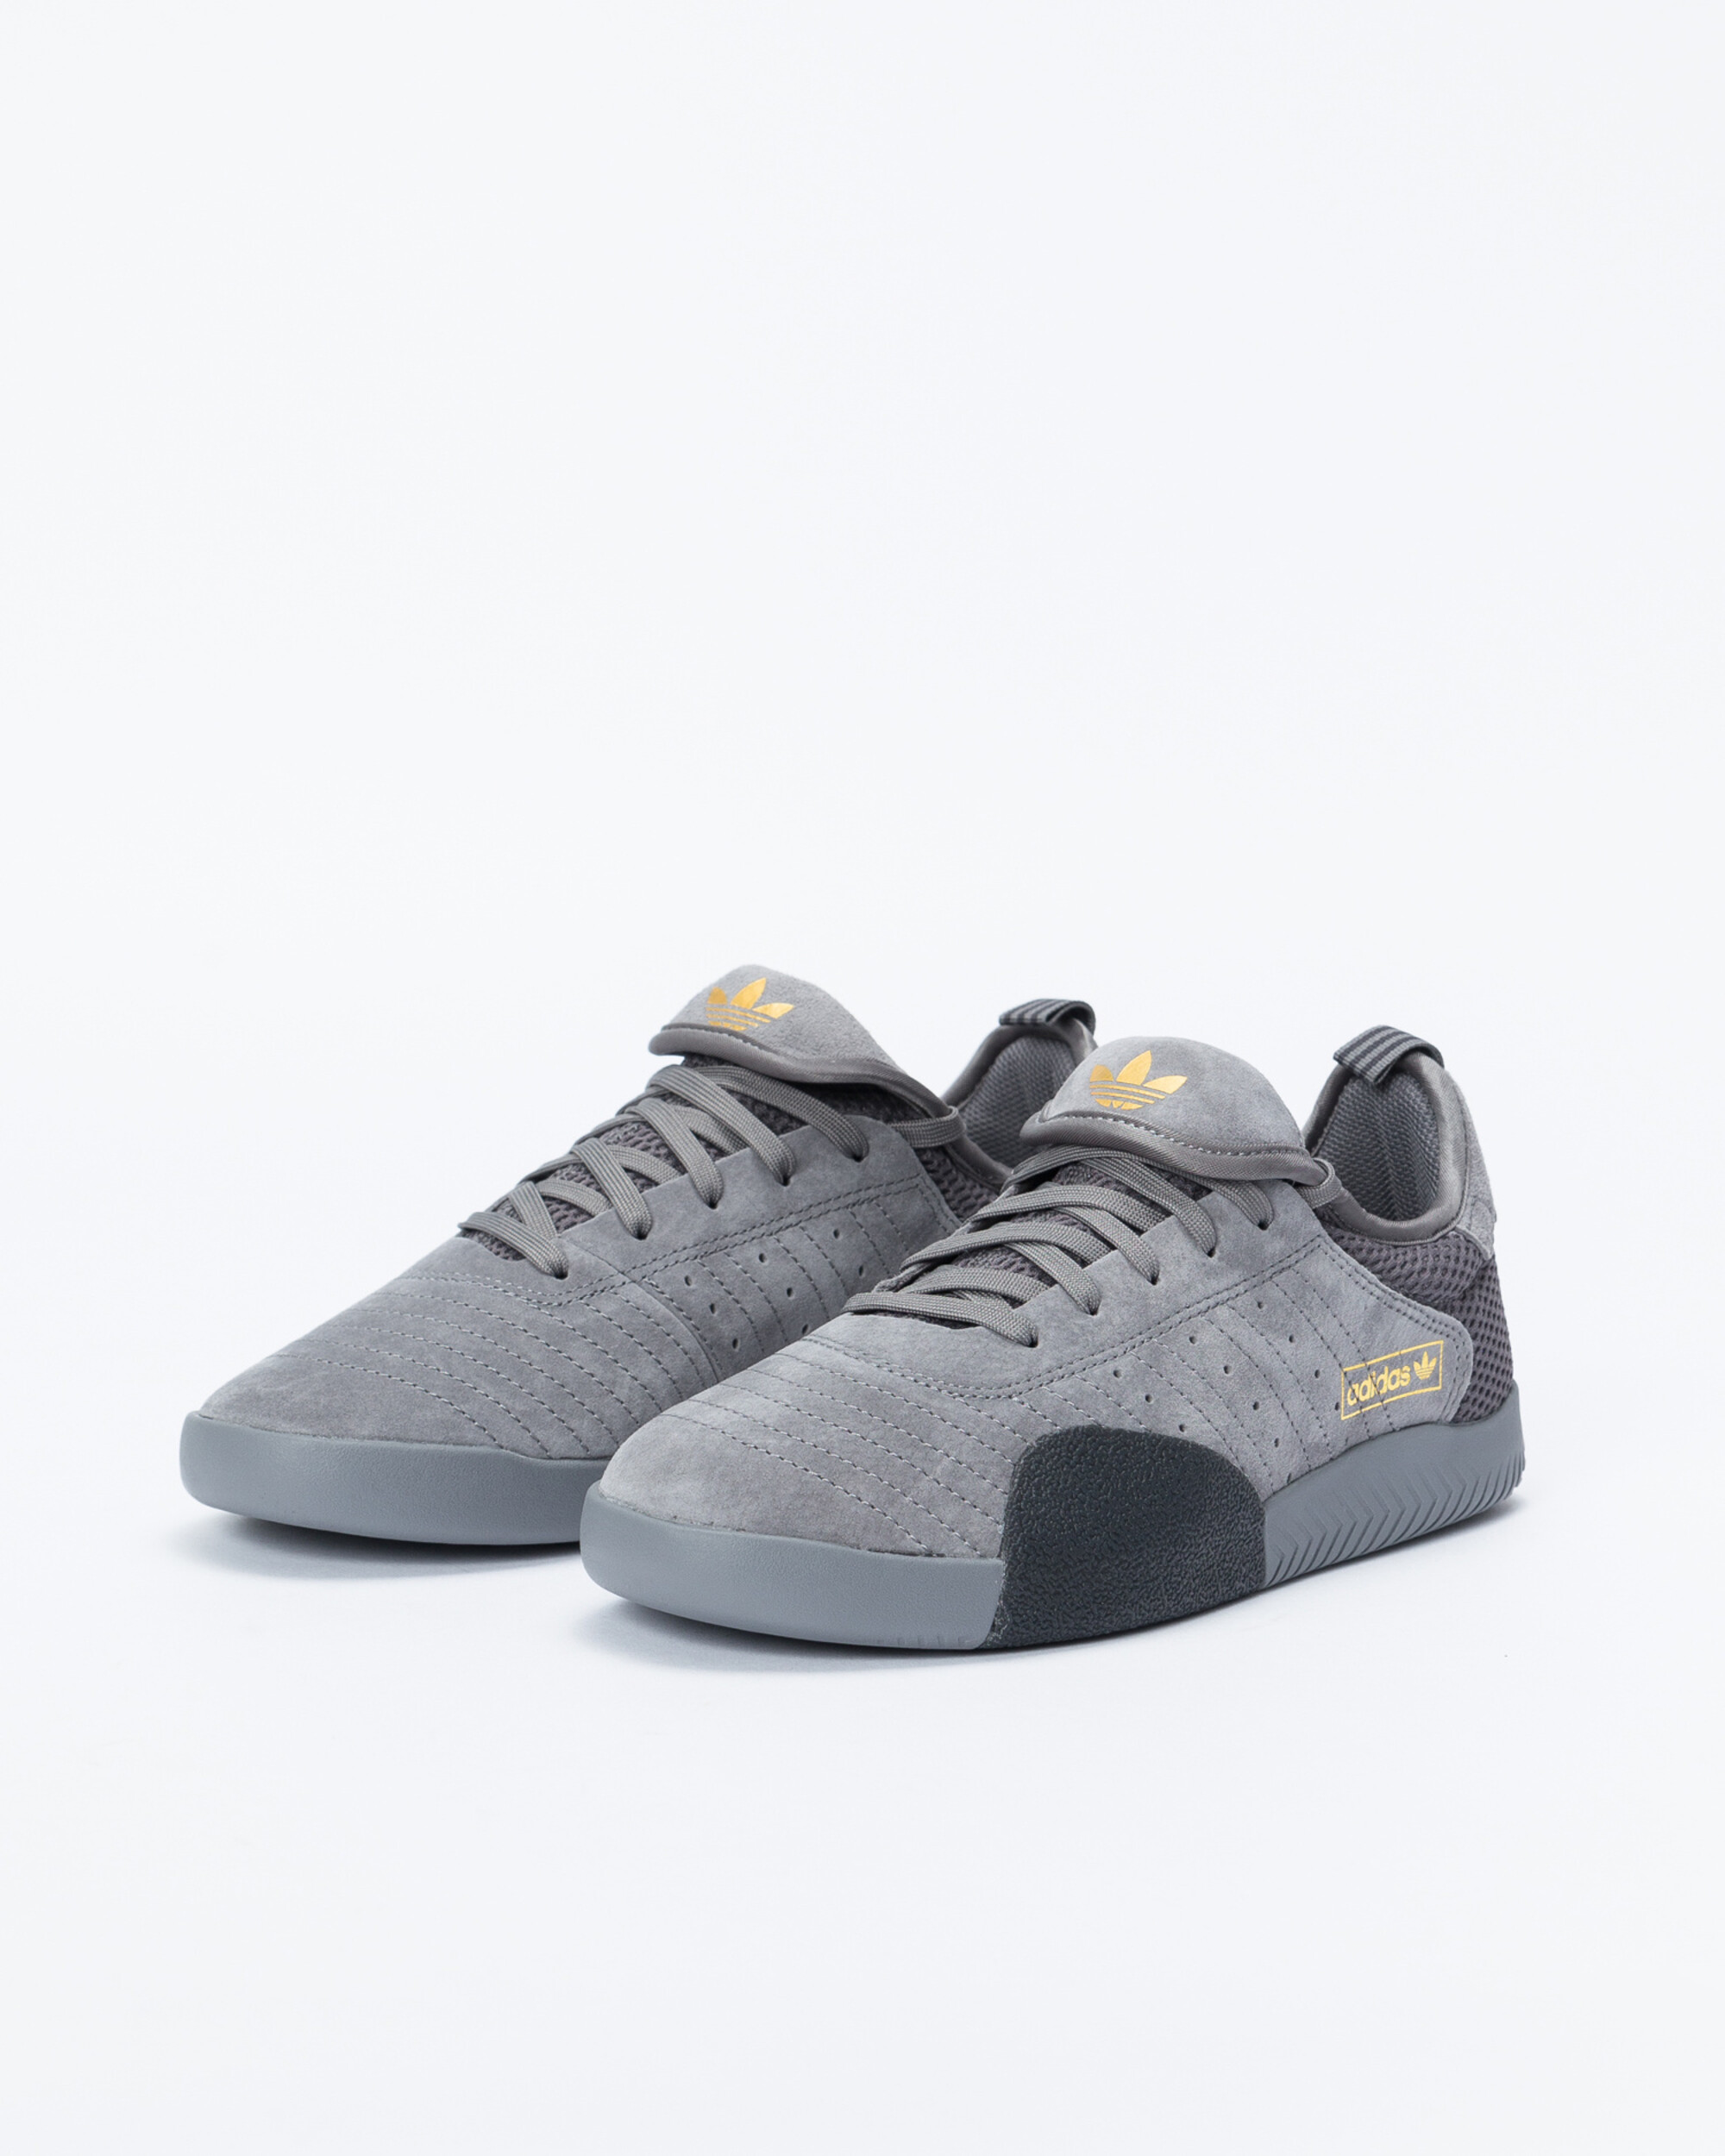 Adidas 3st.003 Grey Four / Carbon / Gold Metallic